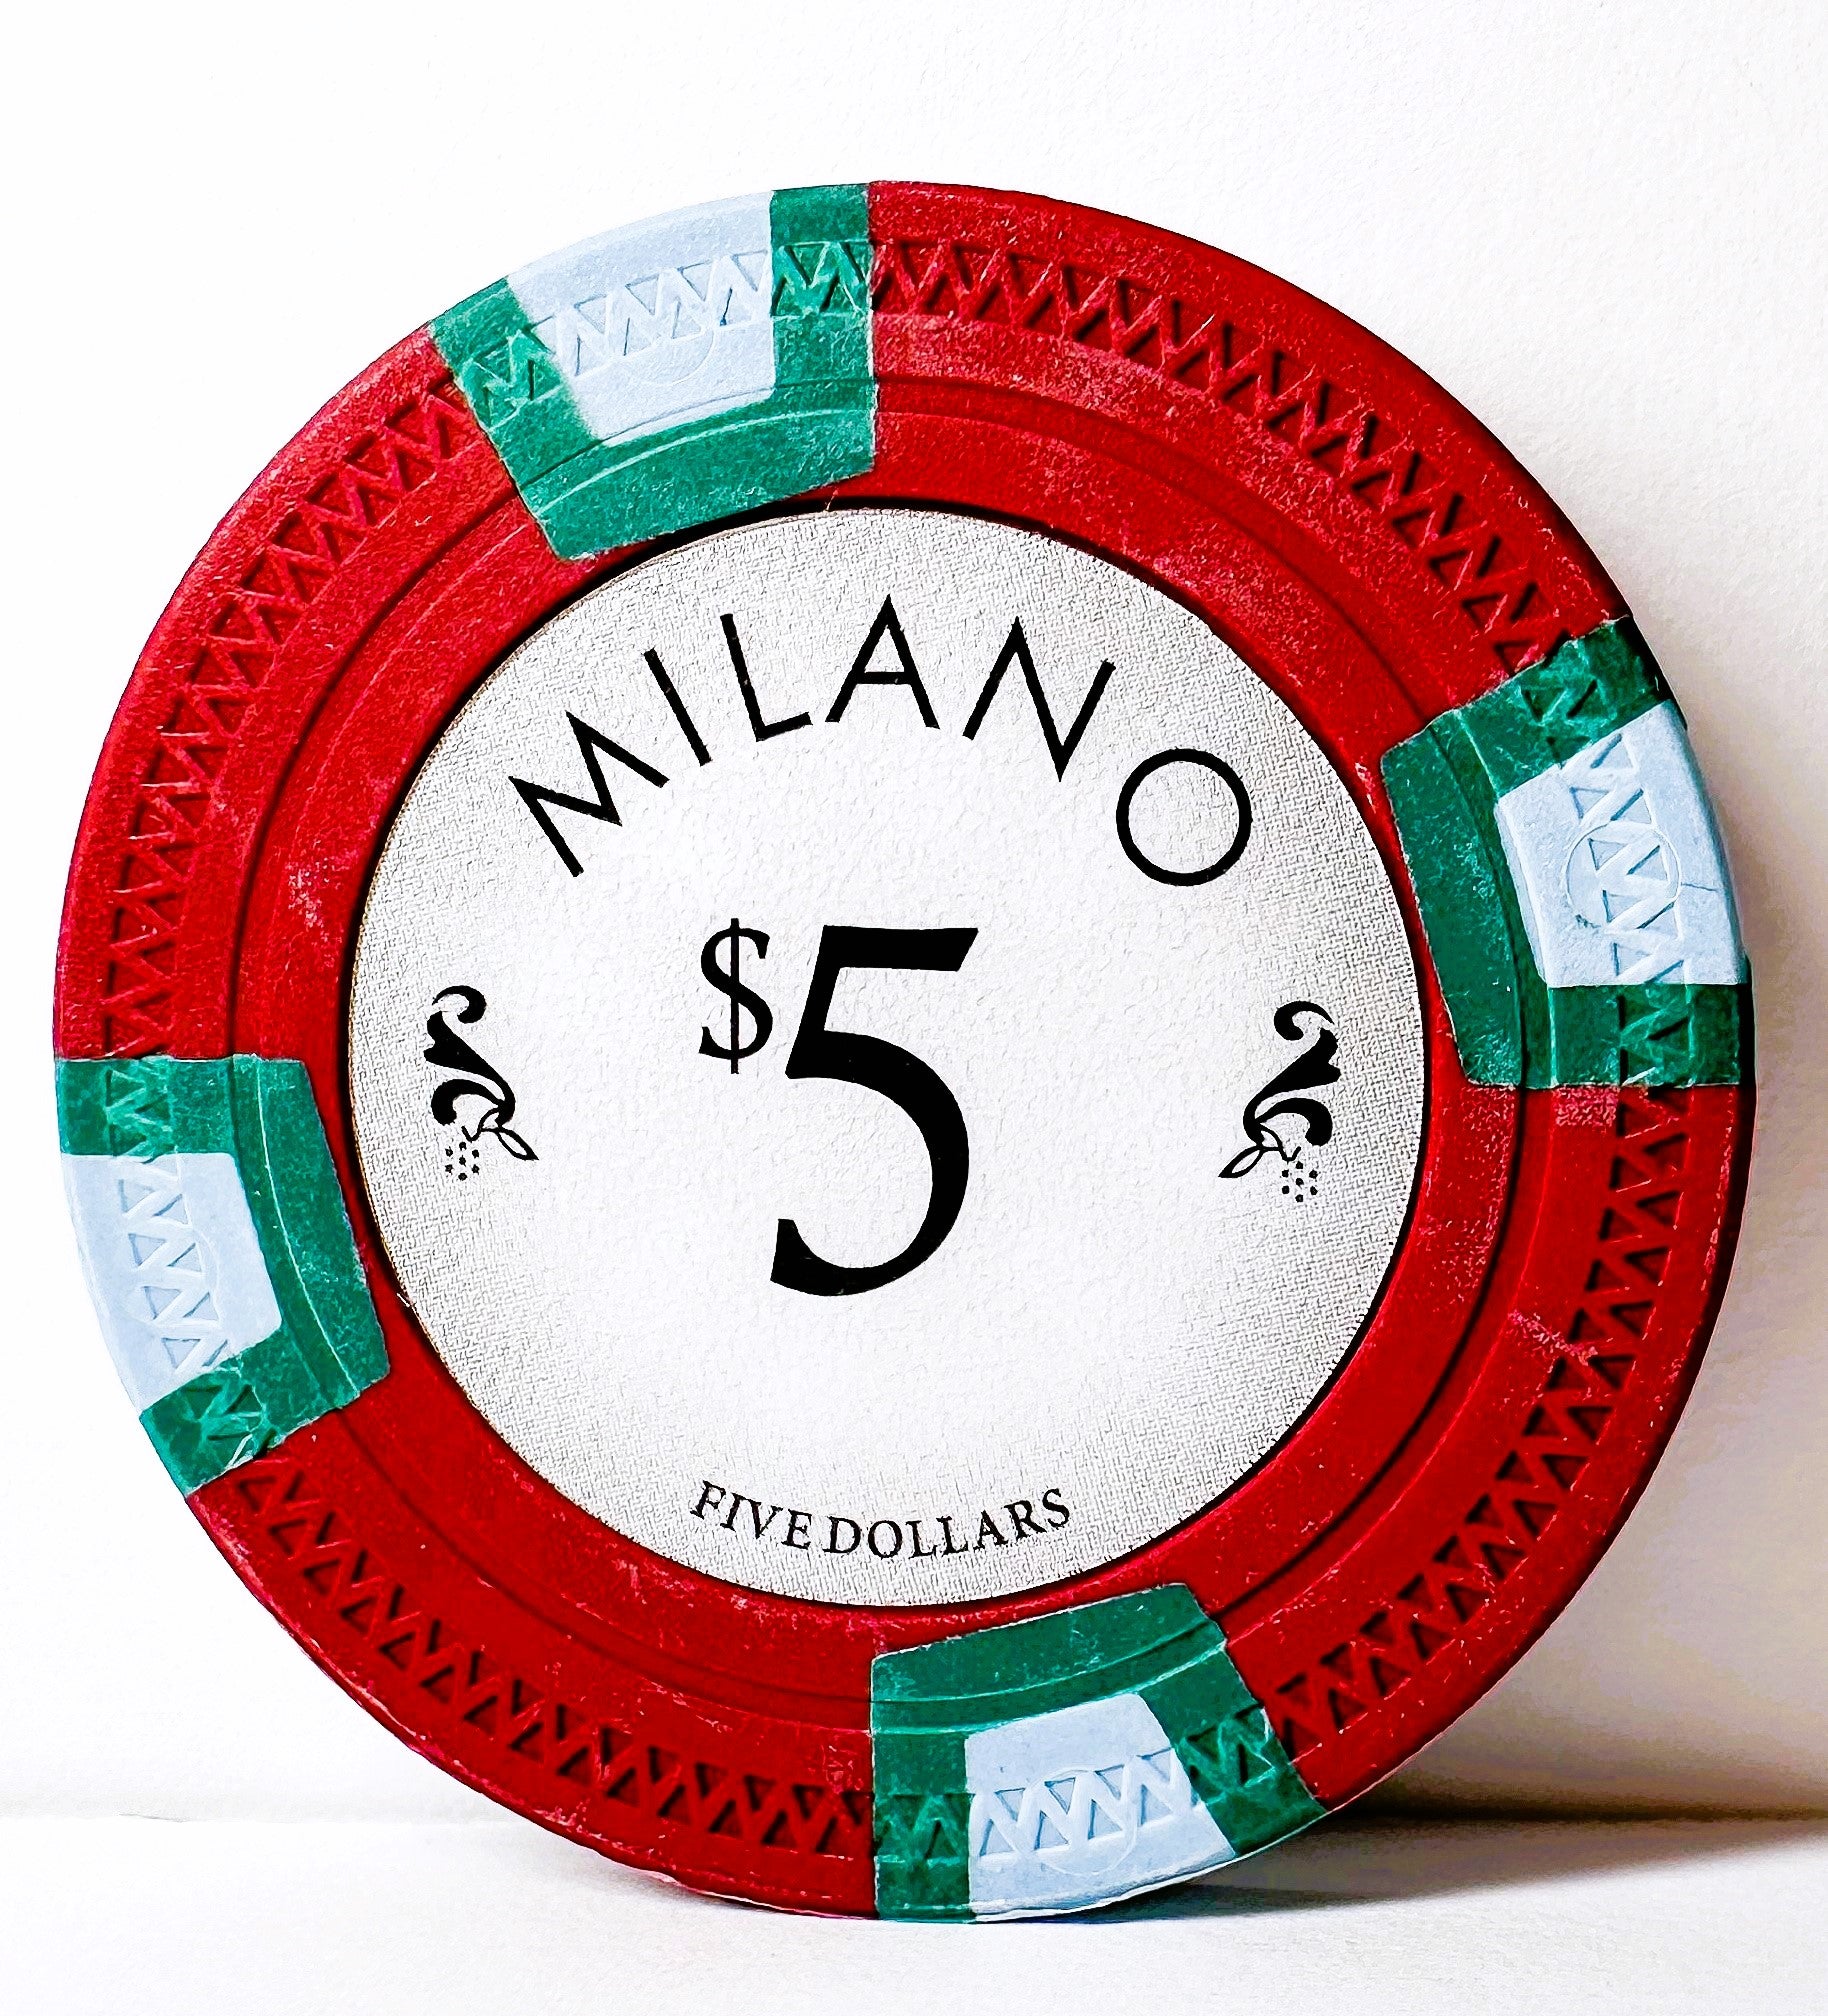 Milano 5 dollar poker chip